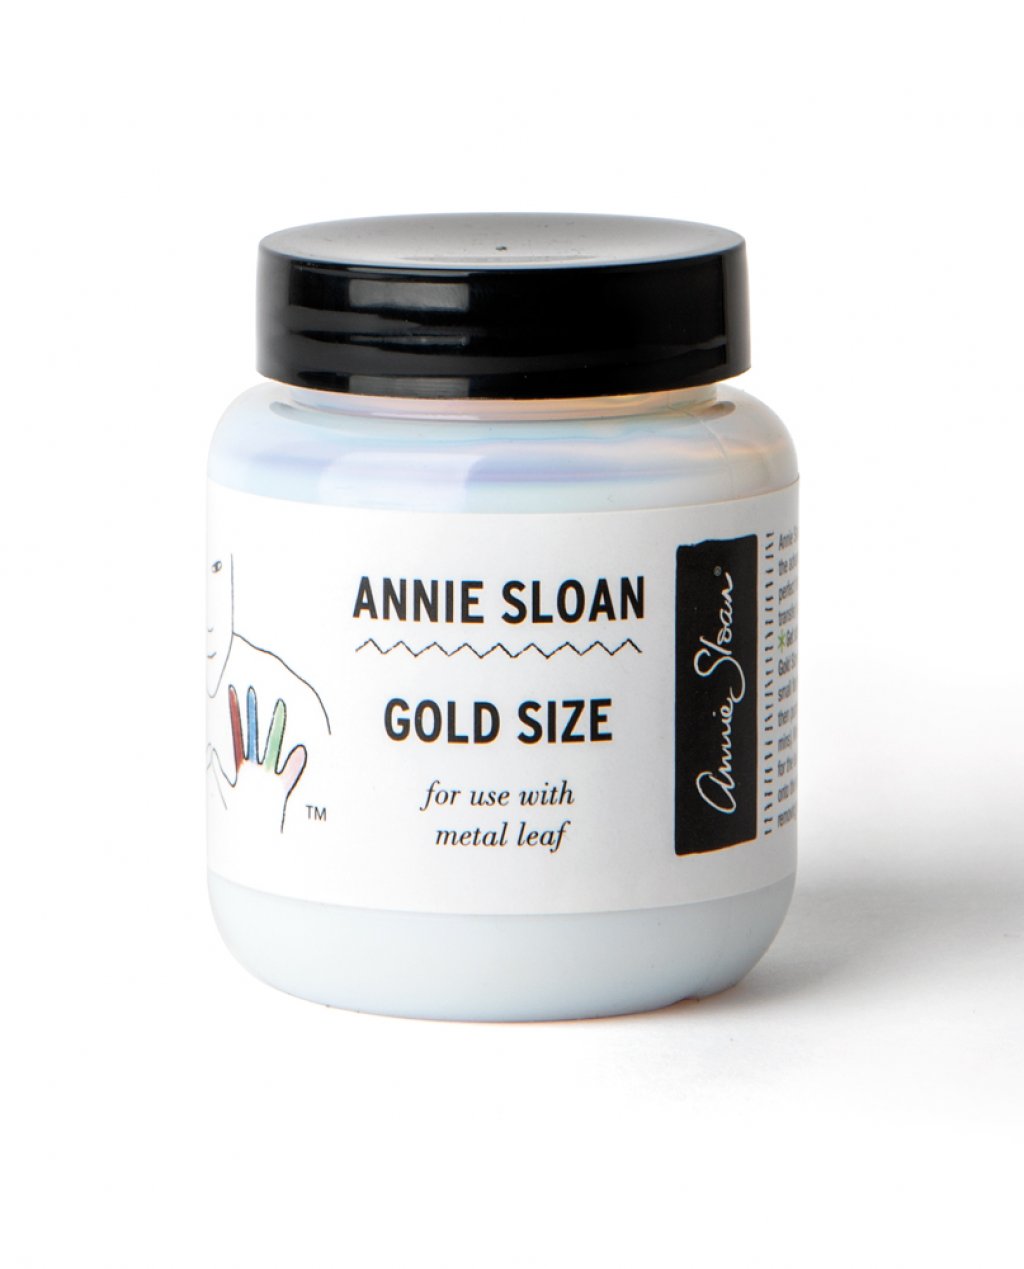 Annie Sloan Gold Size